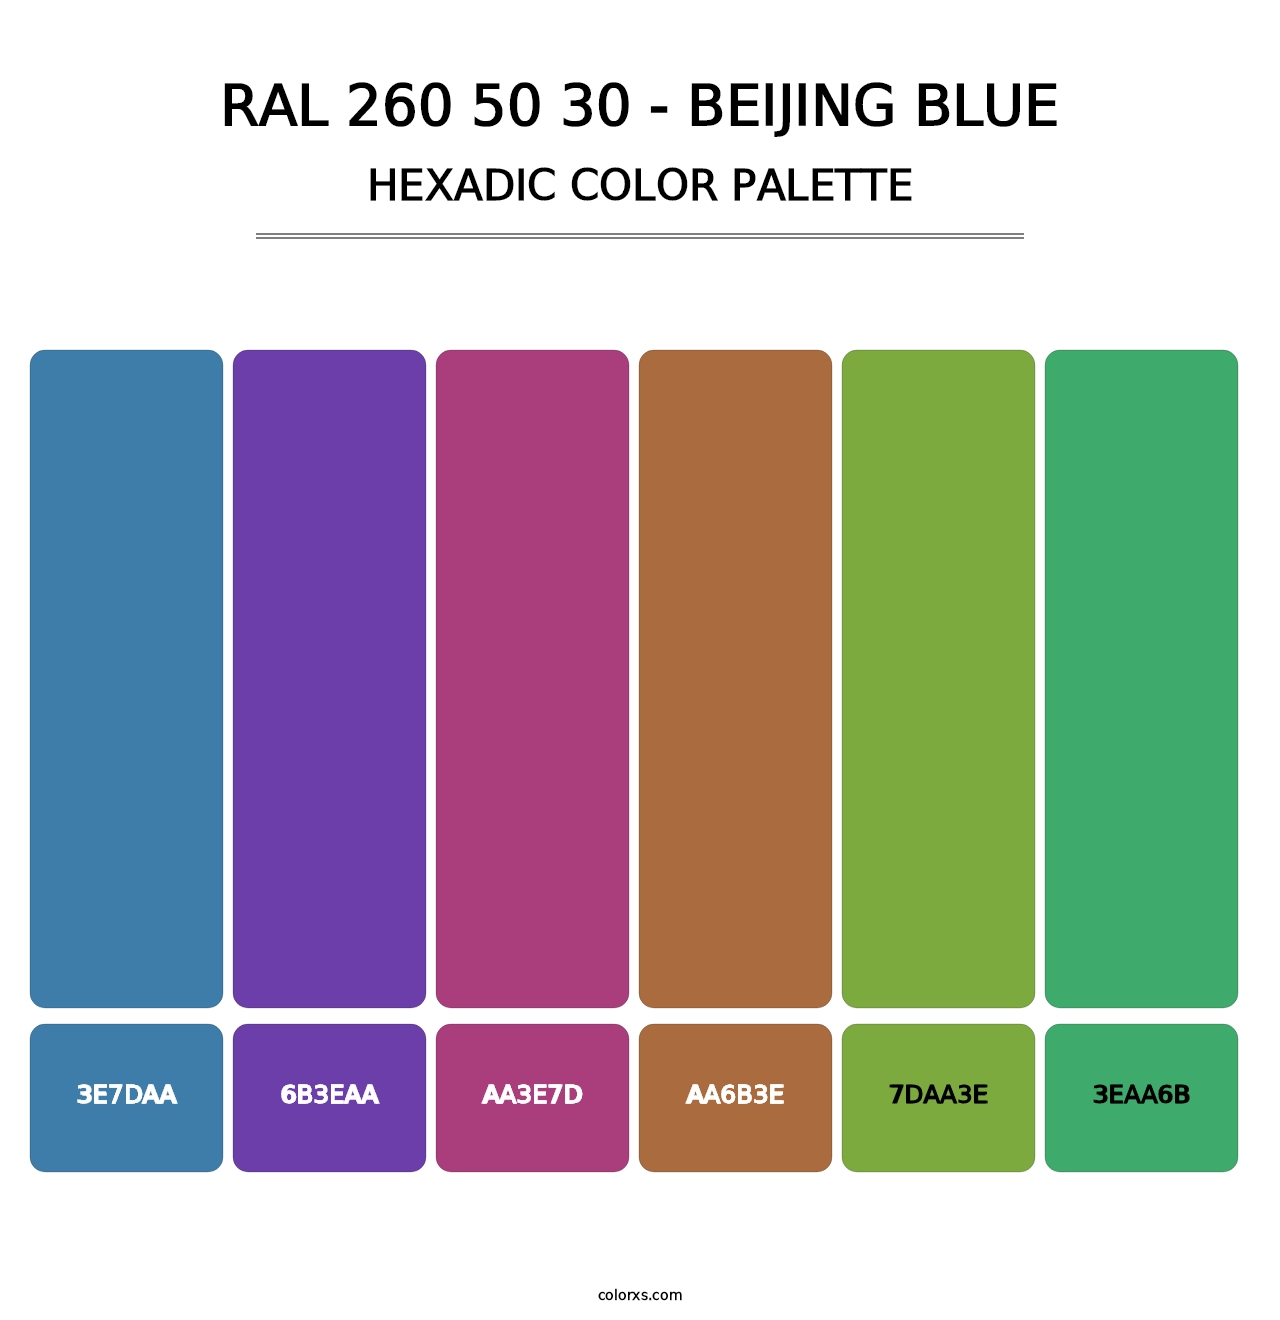 RAL 260 50 30 - Beijing Blue - Hexadic Color Palette